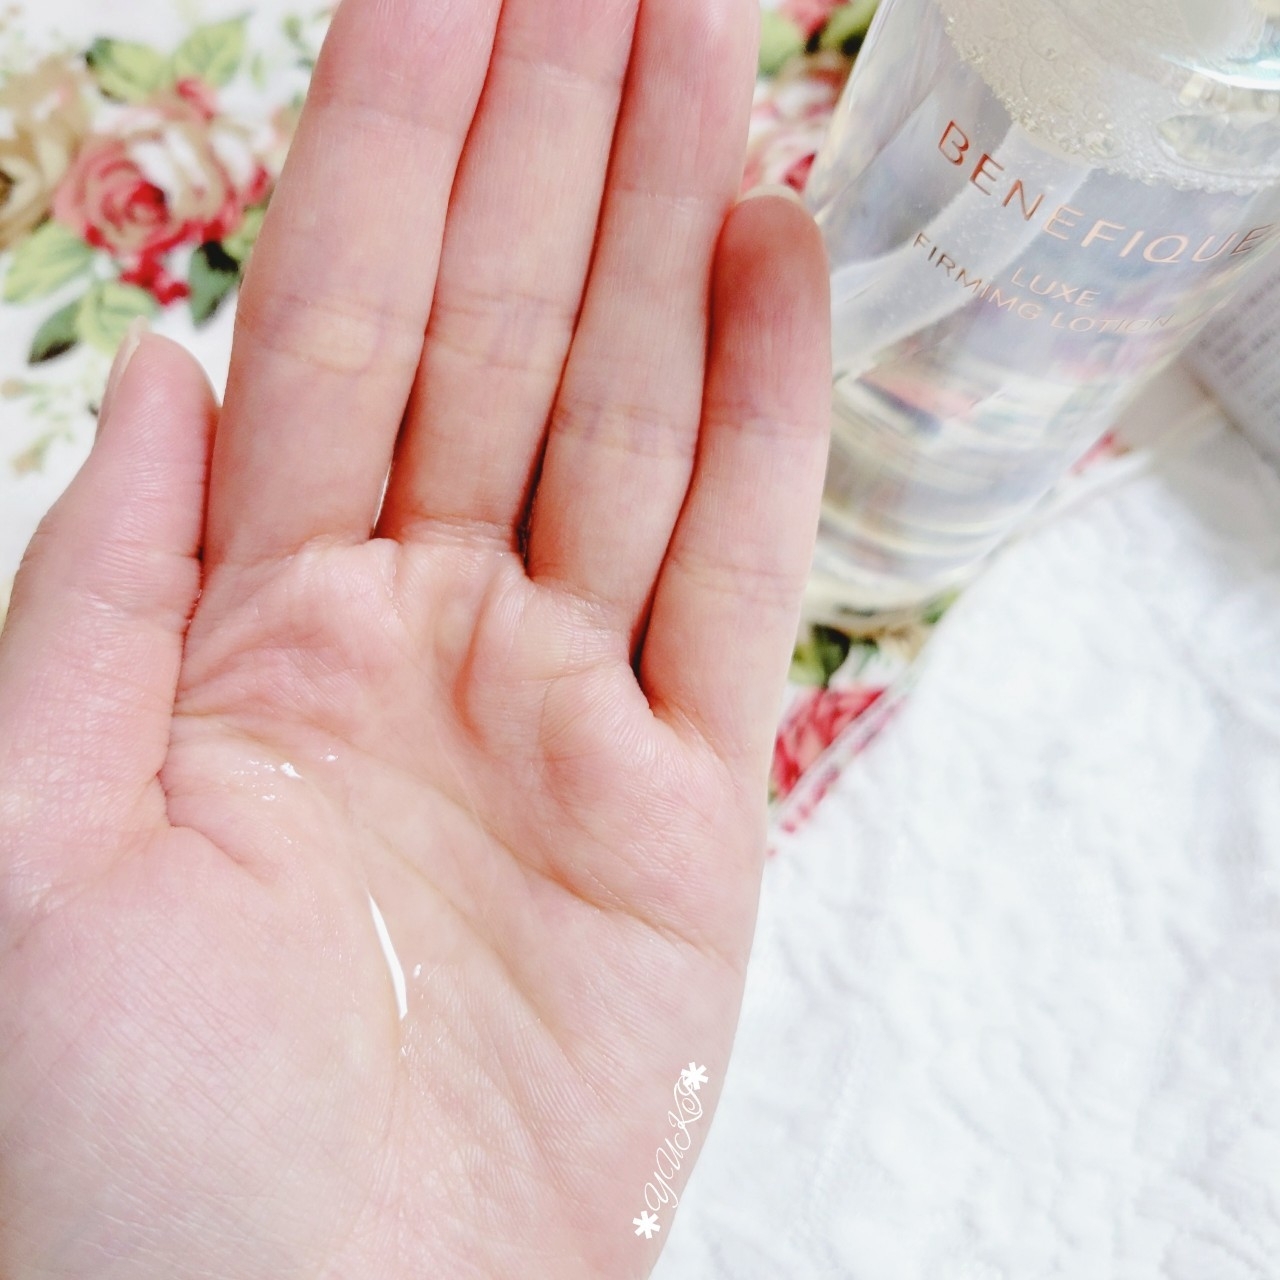 BENEFIQUE LUXE(ﾍﾞﾈﾌｨｰｸ ﾘｭｸｽ)ファーミングローション(医薬部外品)収れん化粧水を使ったYUKIさんのクチコミ画像2